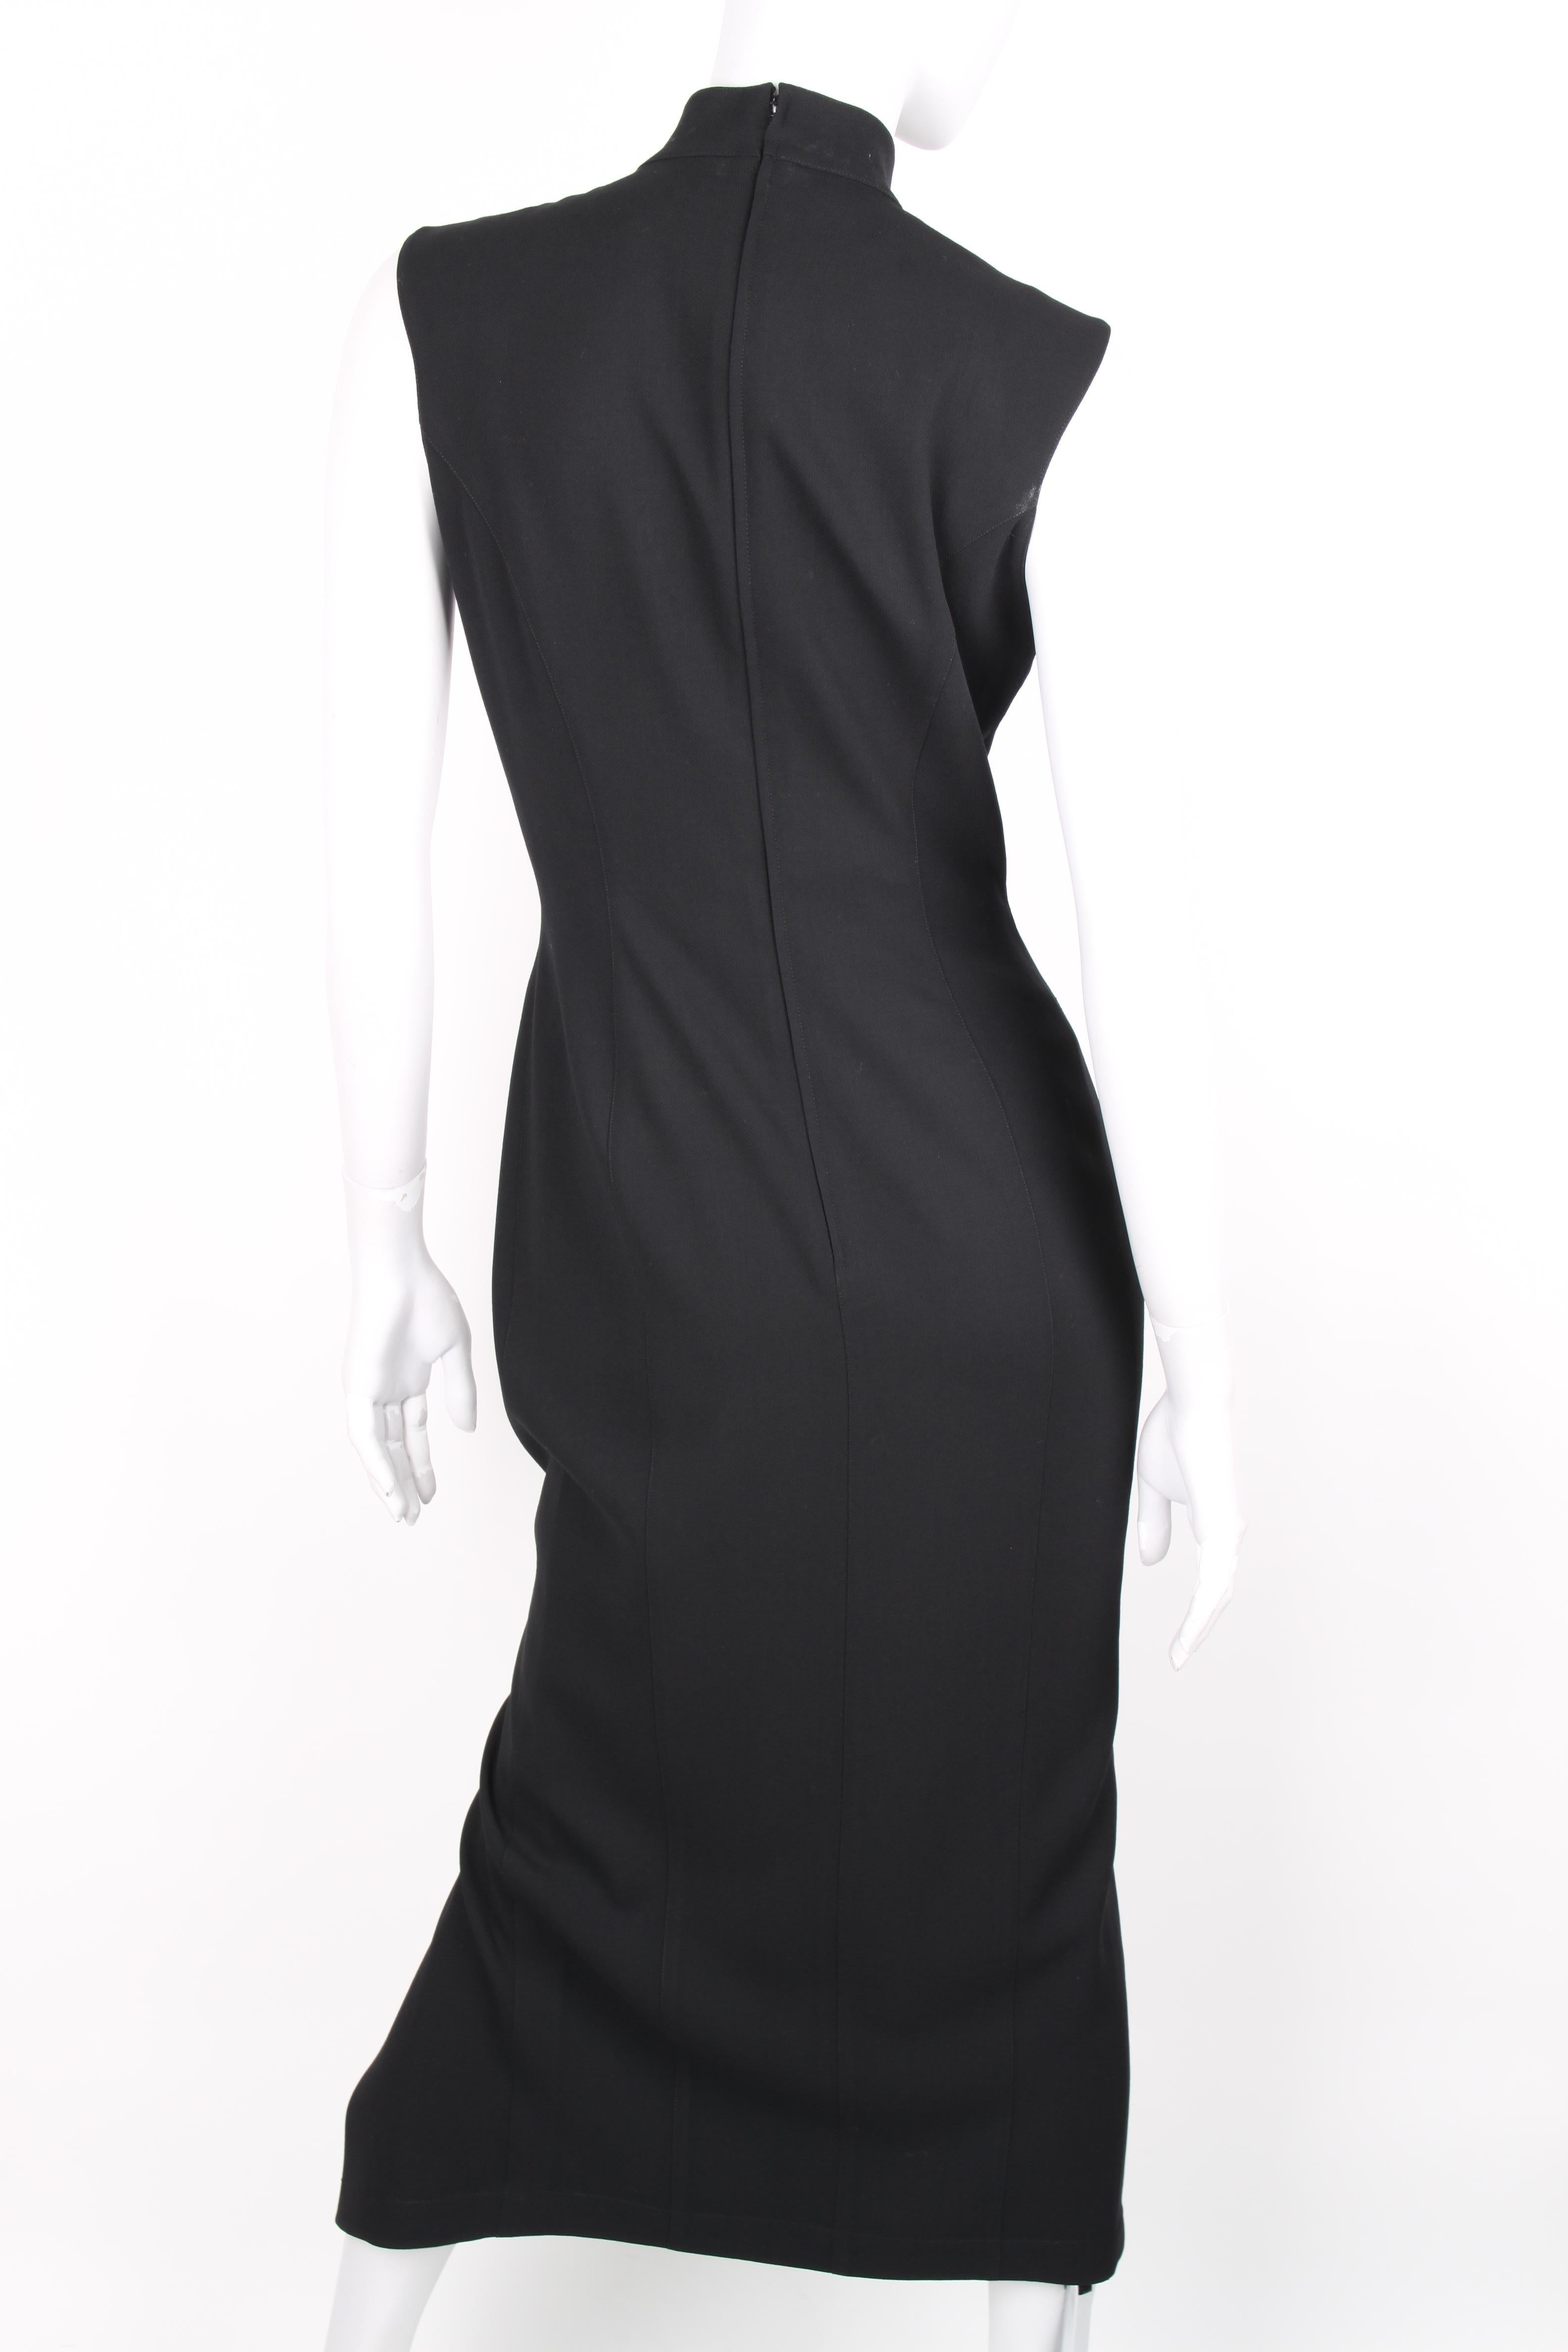 Thierry Mugler Fall/Winter 1992 Black High-Neckline Sleeveless Belted Dress For Sale 2